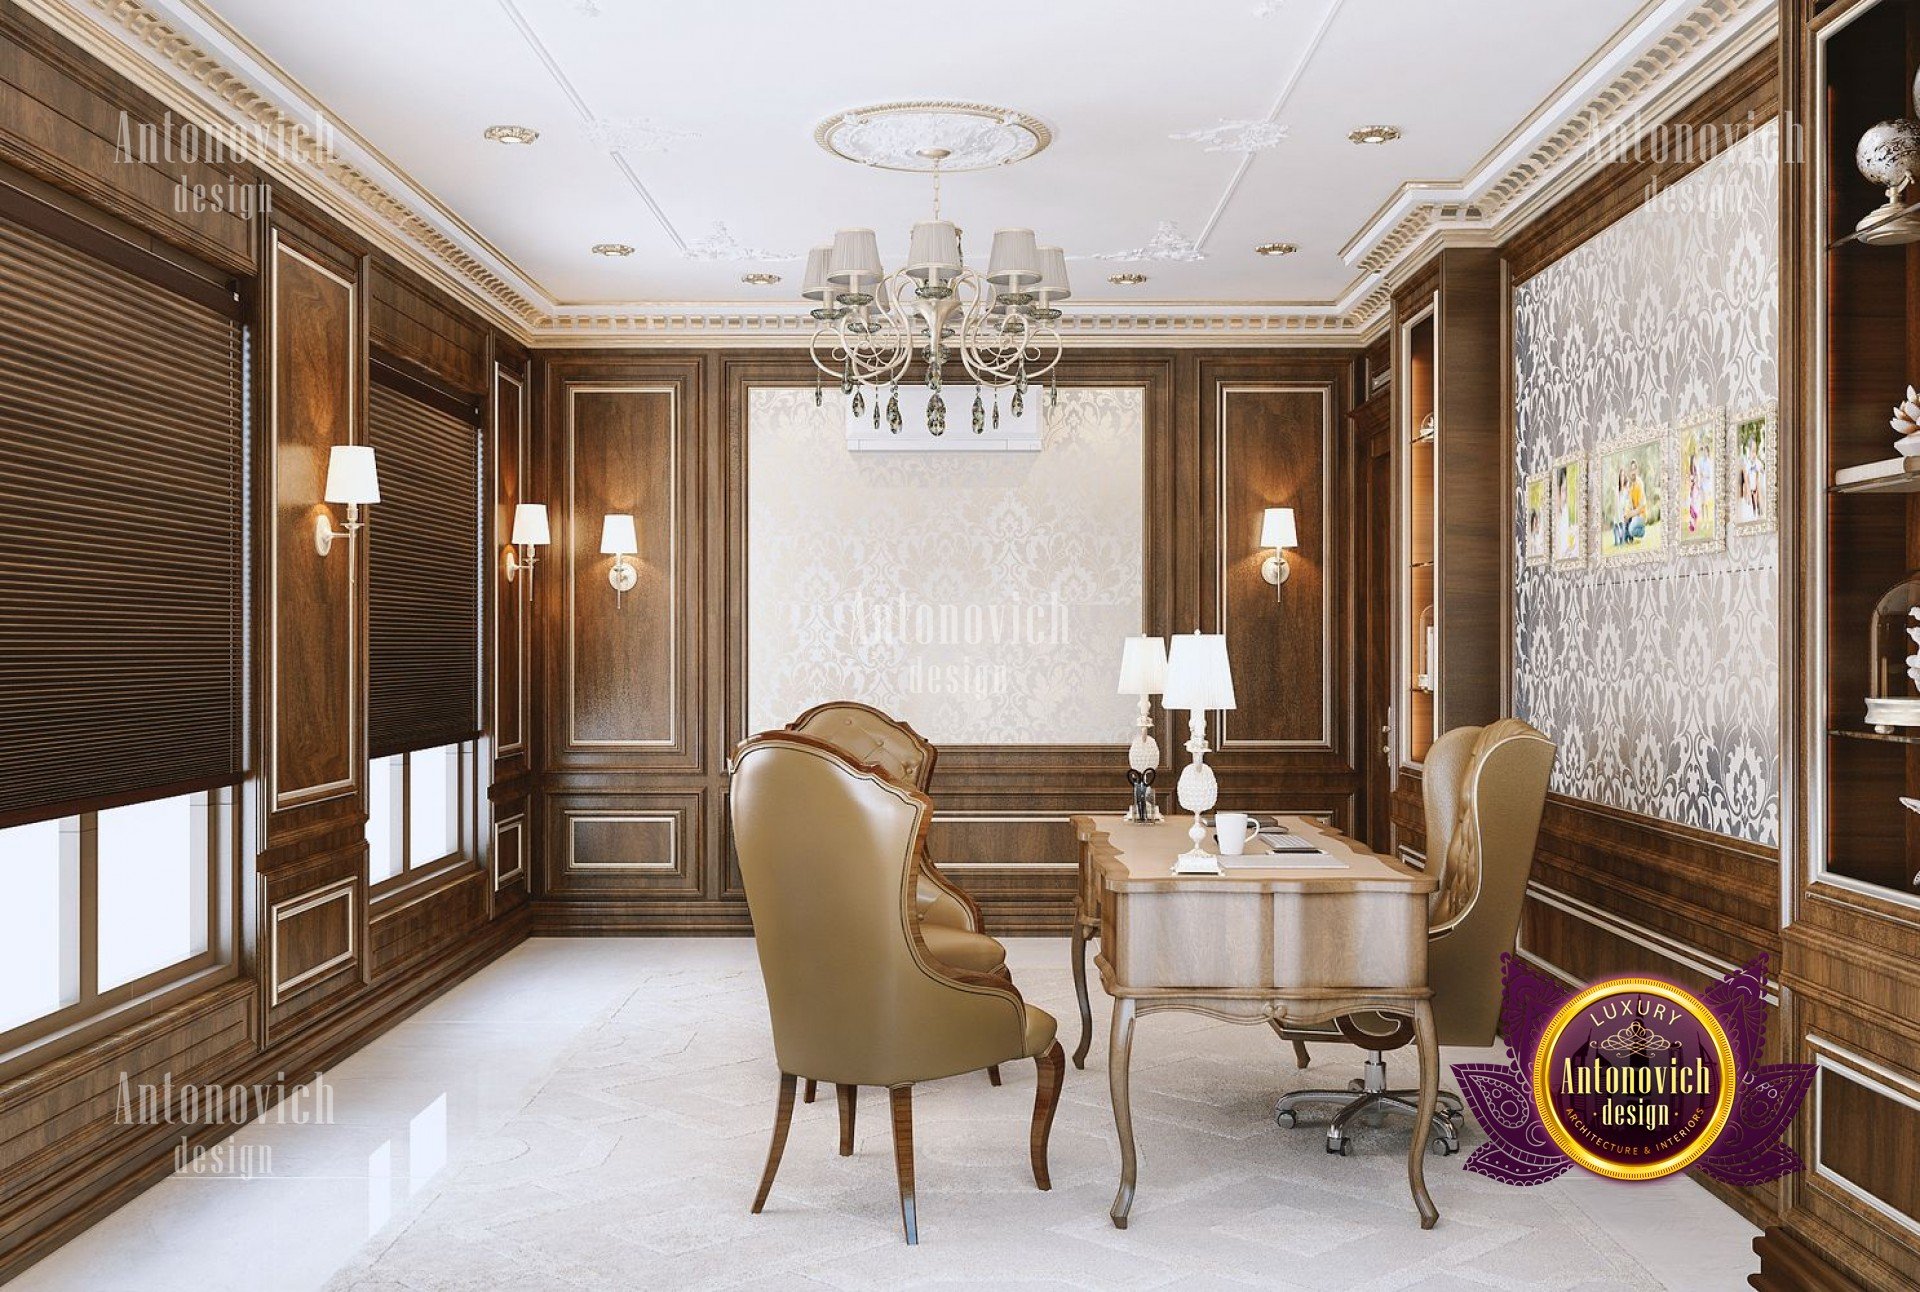 Royal luxury interior